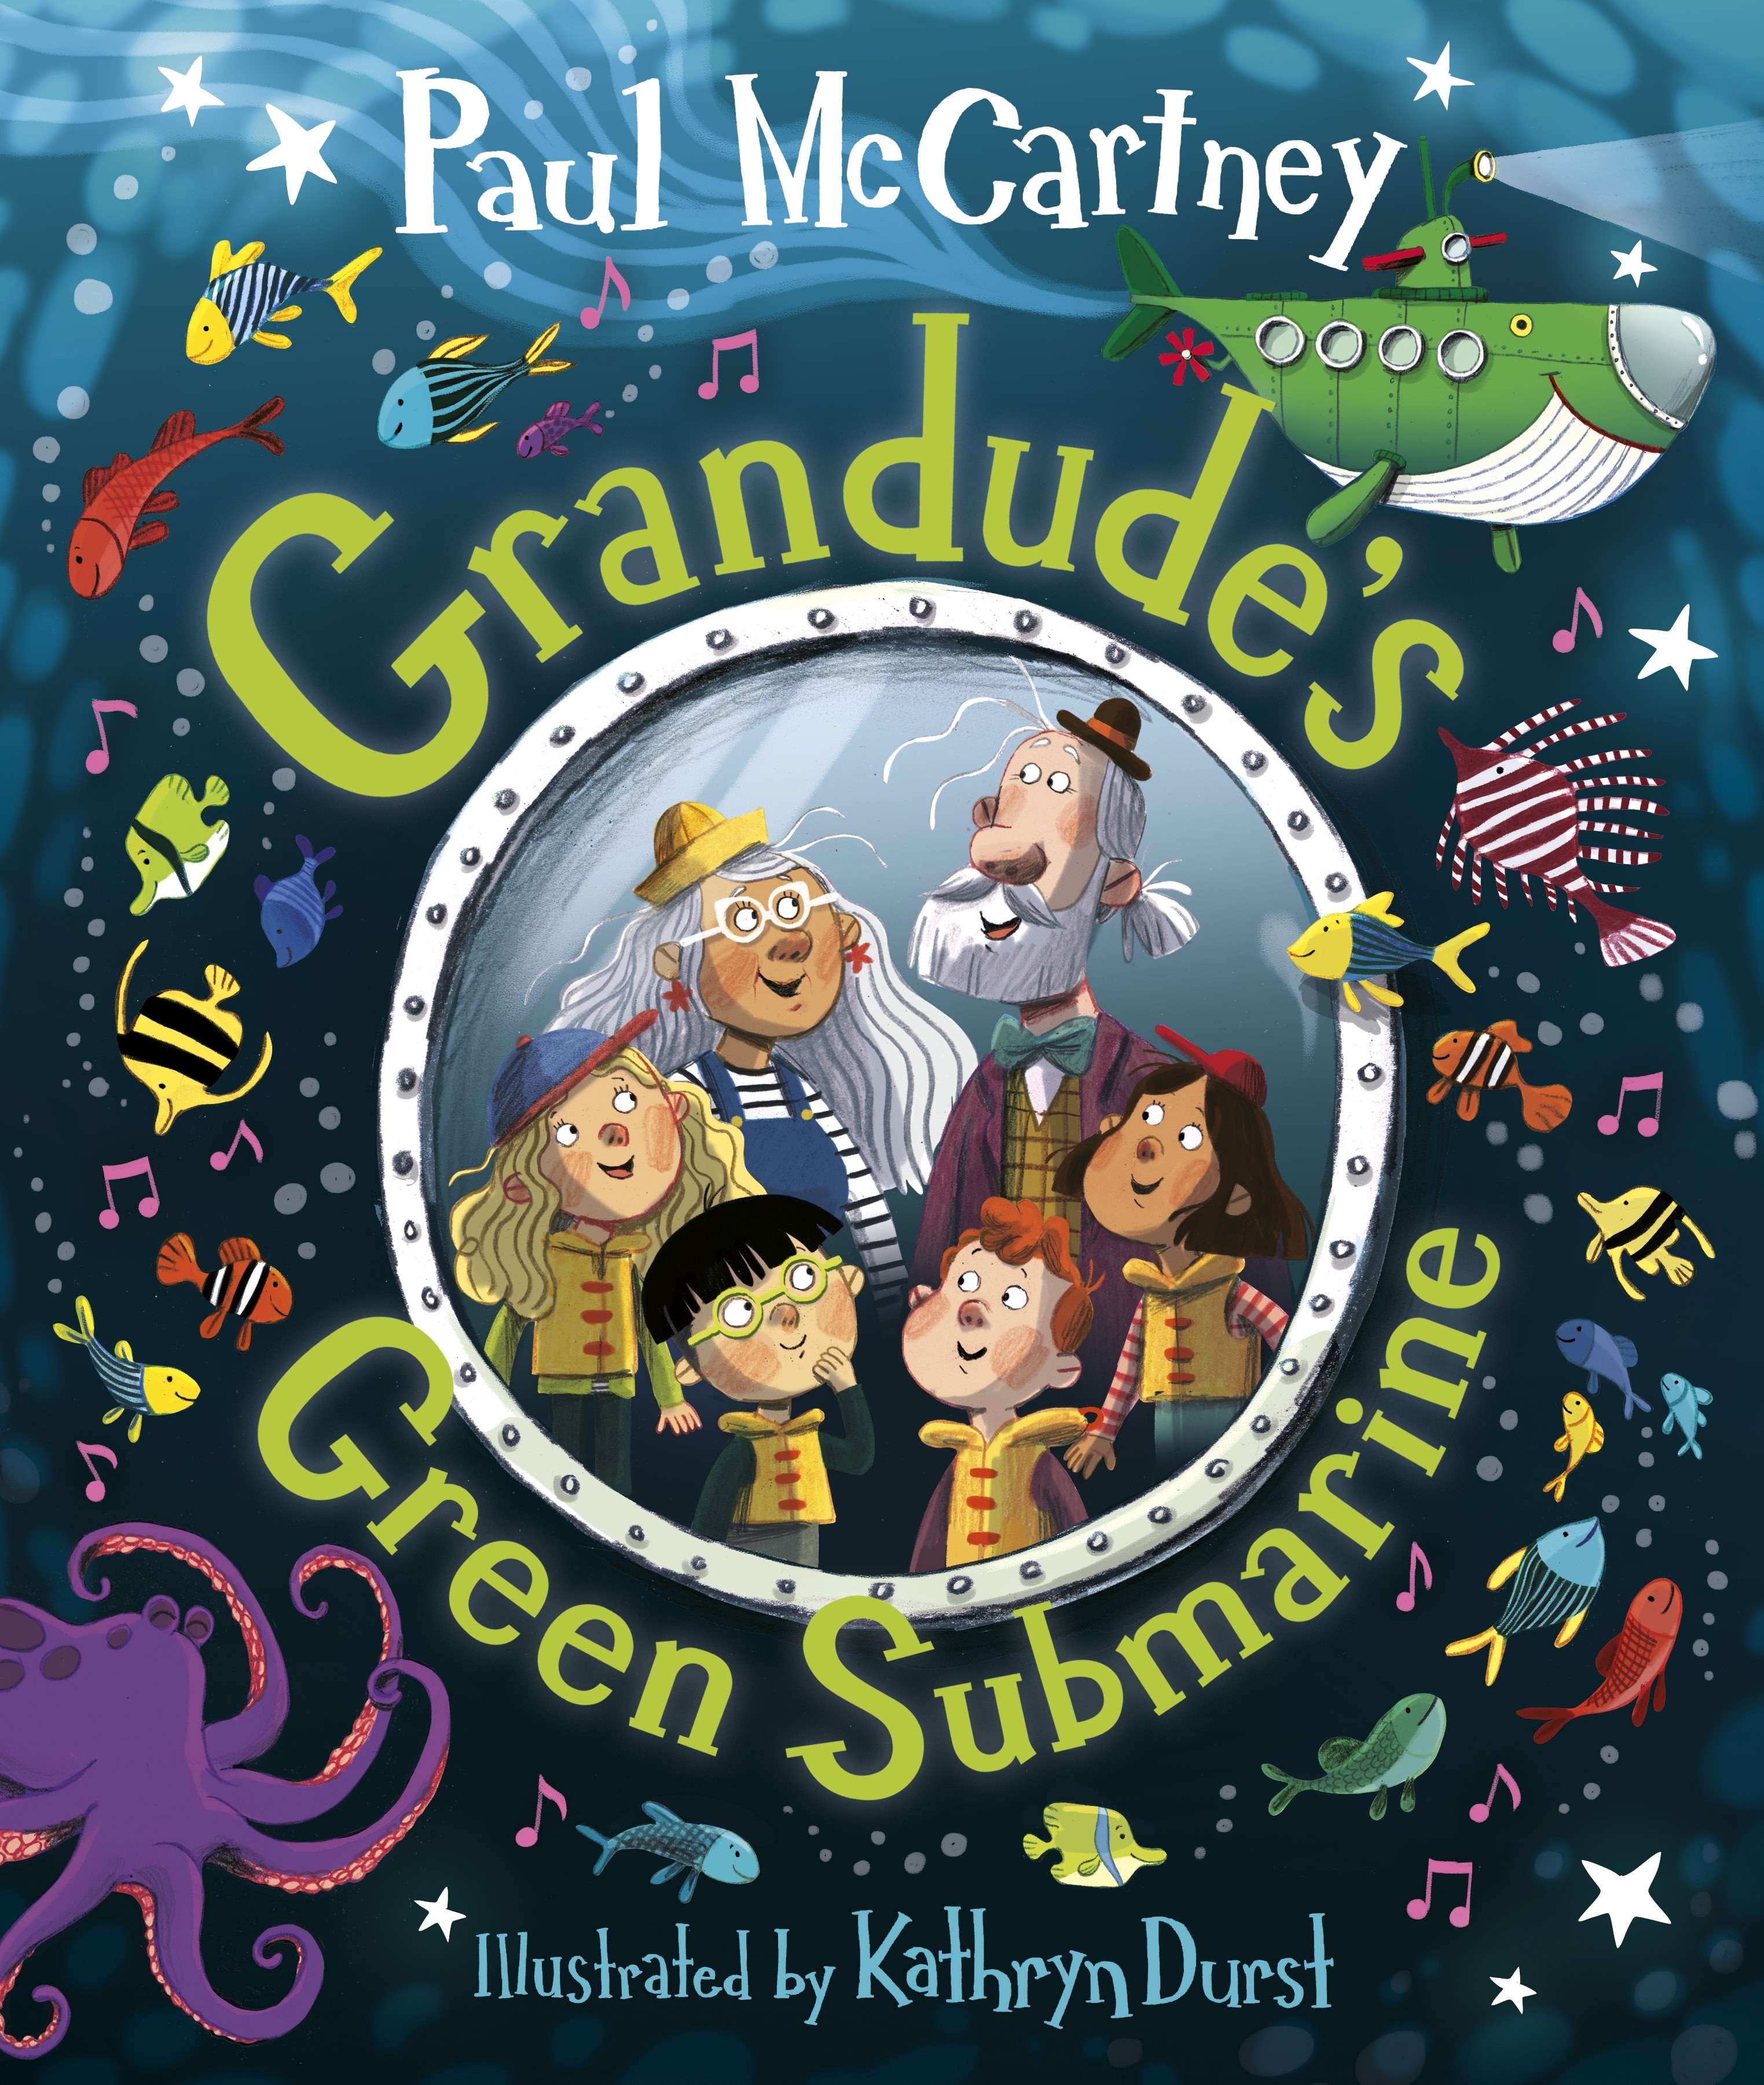 Book “Grandude's Green Submarine” by Paul McCartney — September 30, 2021